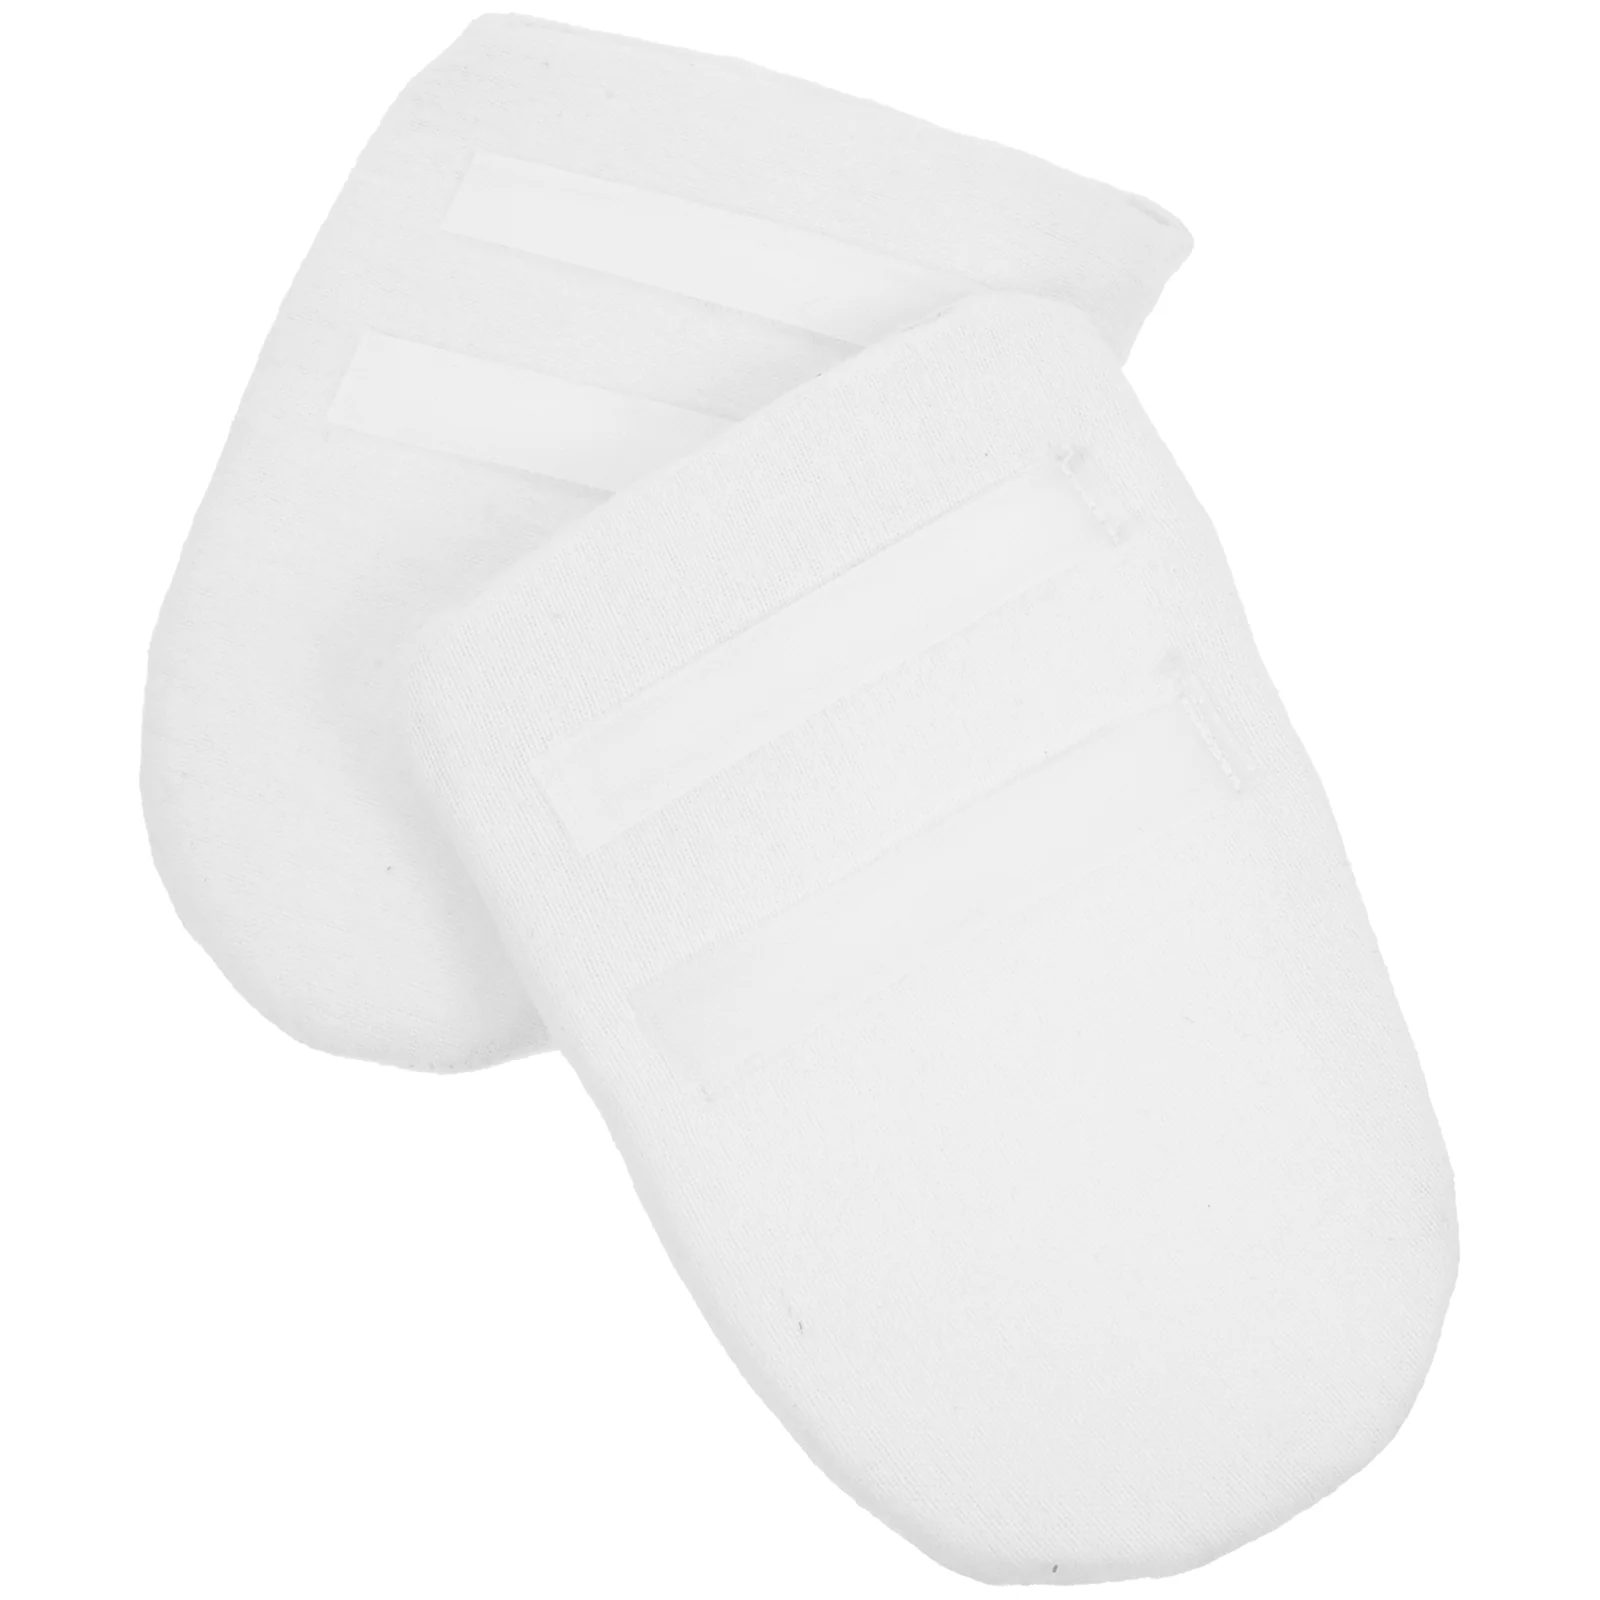 

2 Pcs Heart Self Adhesive Shoulder Pads Port Pillow Bras Strap Outdoor Cotton Female Patient Supplies Miss